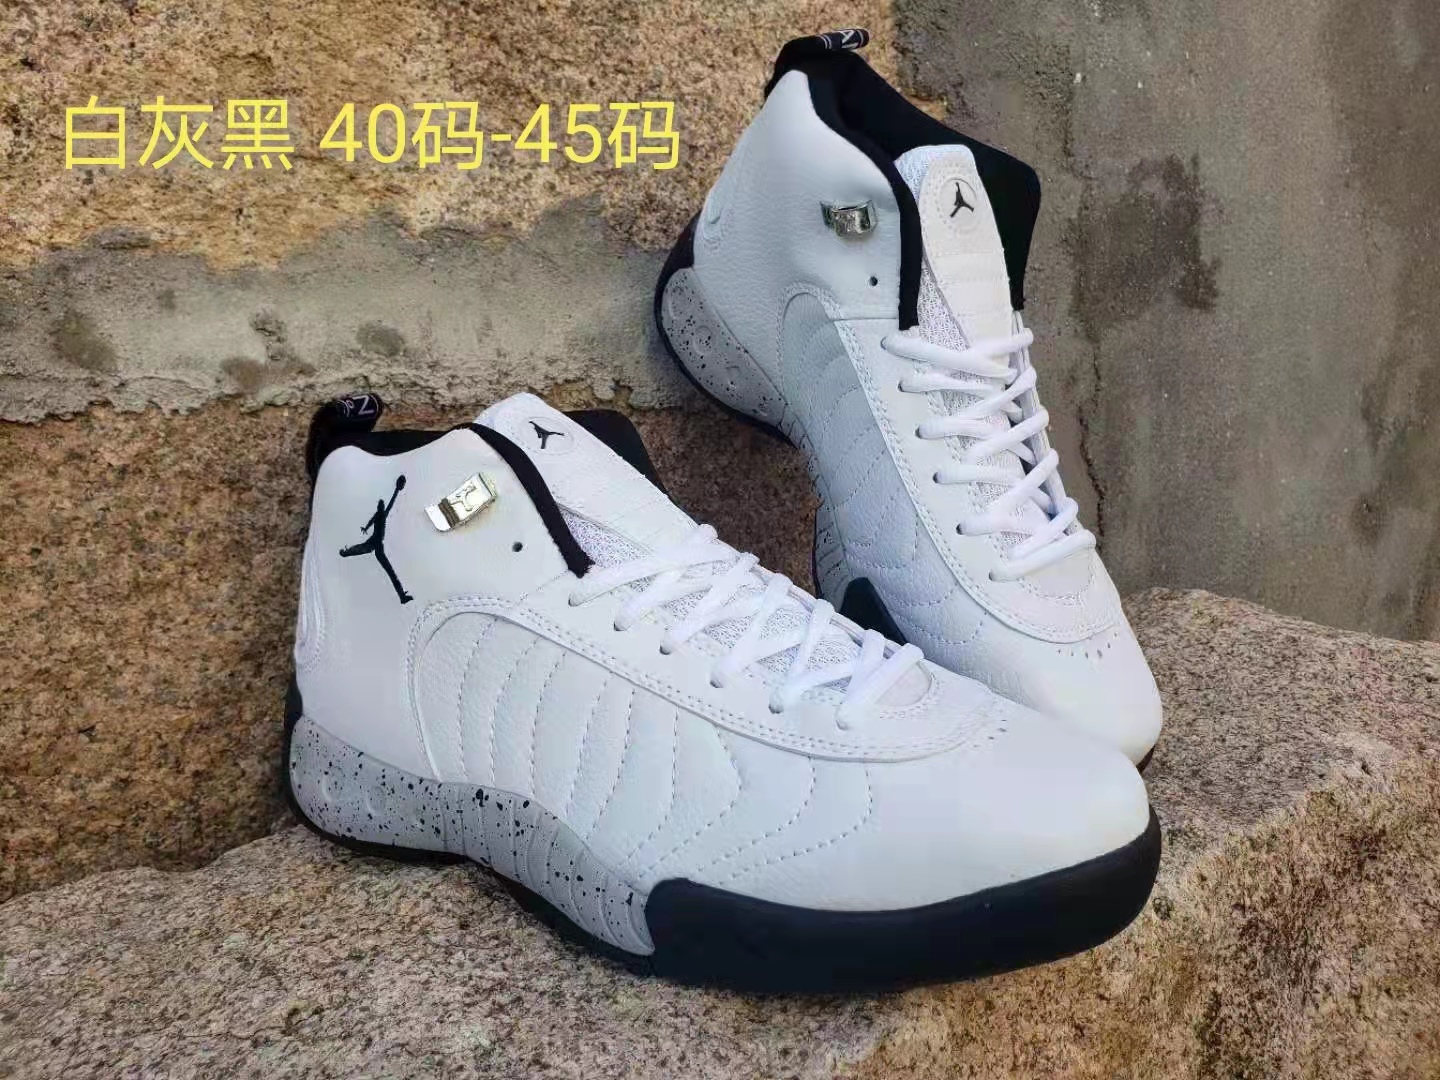 New Air Jordan 12.5 White Black Grey Shoes